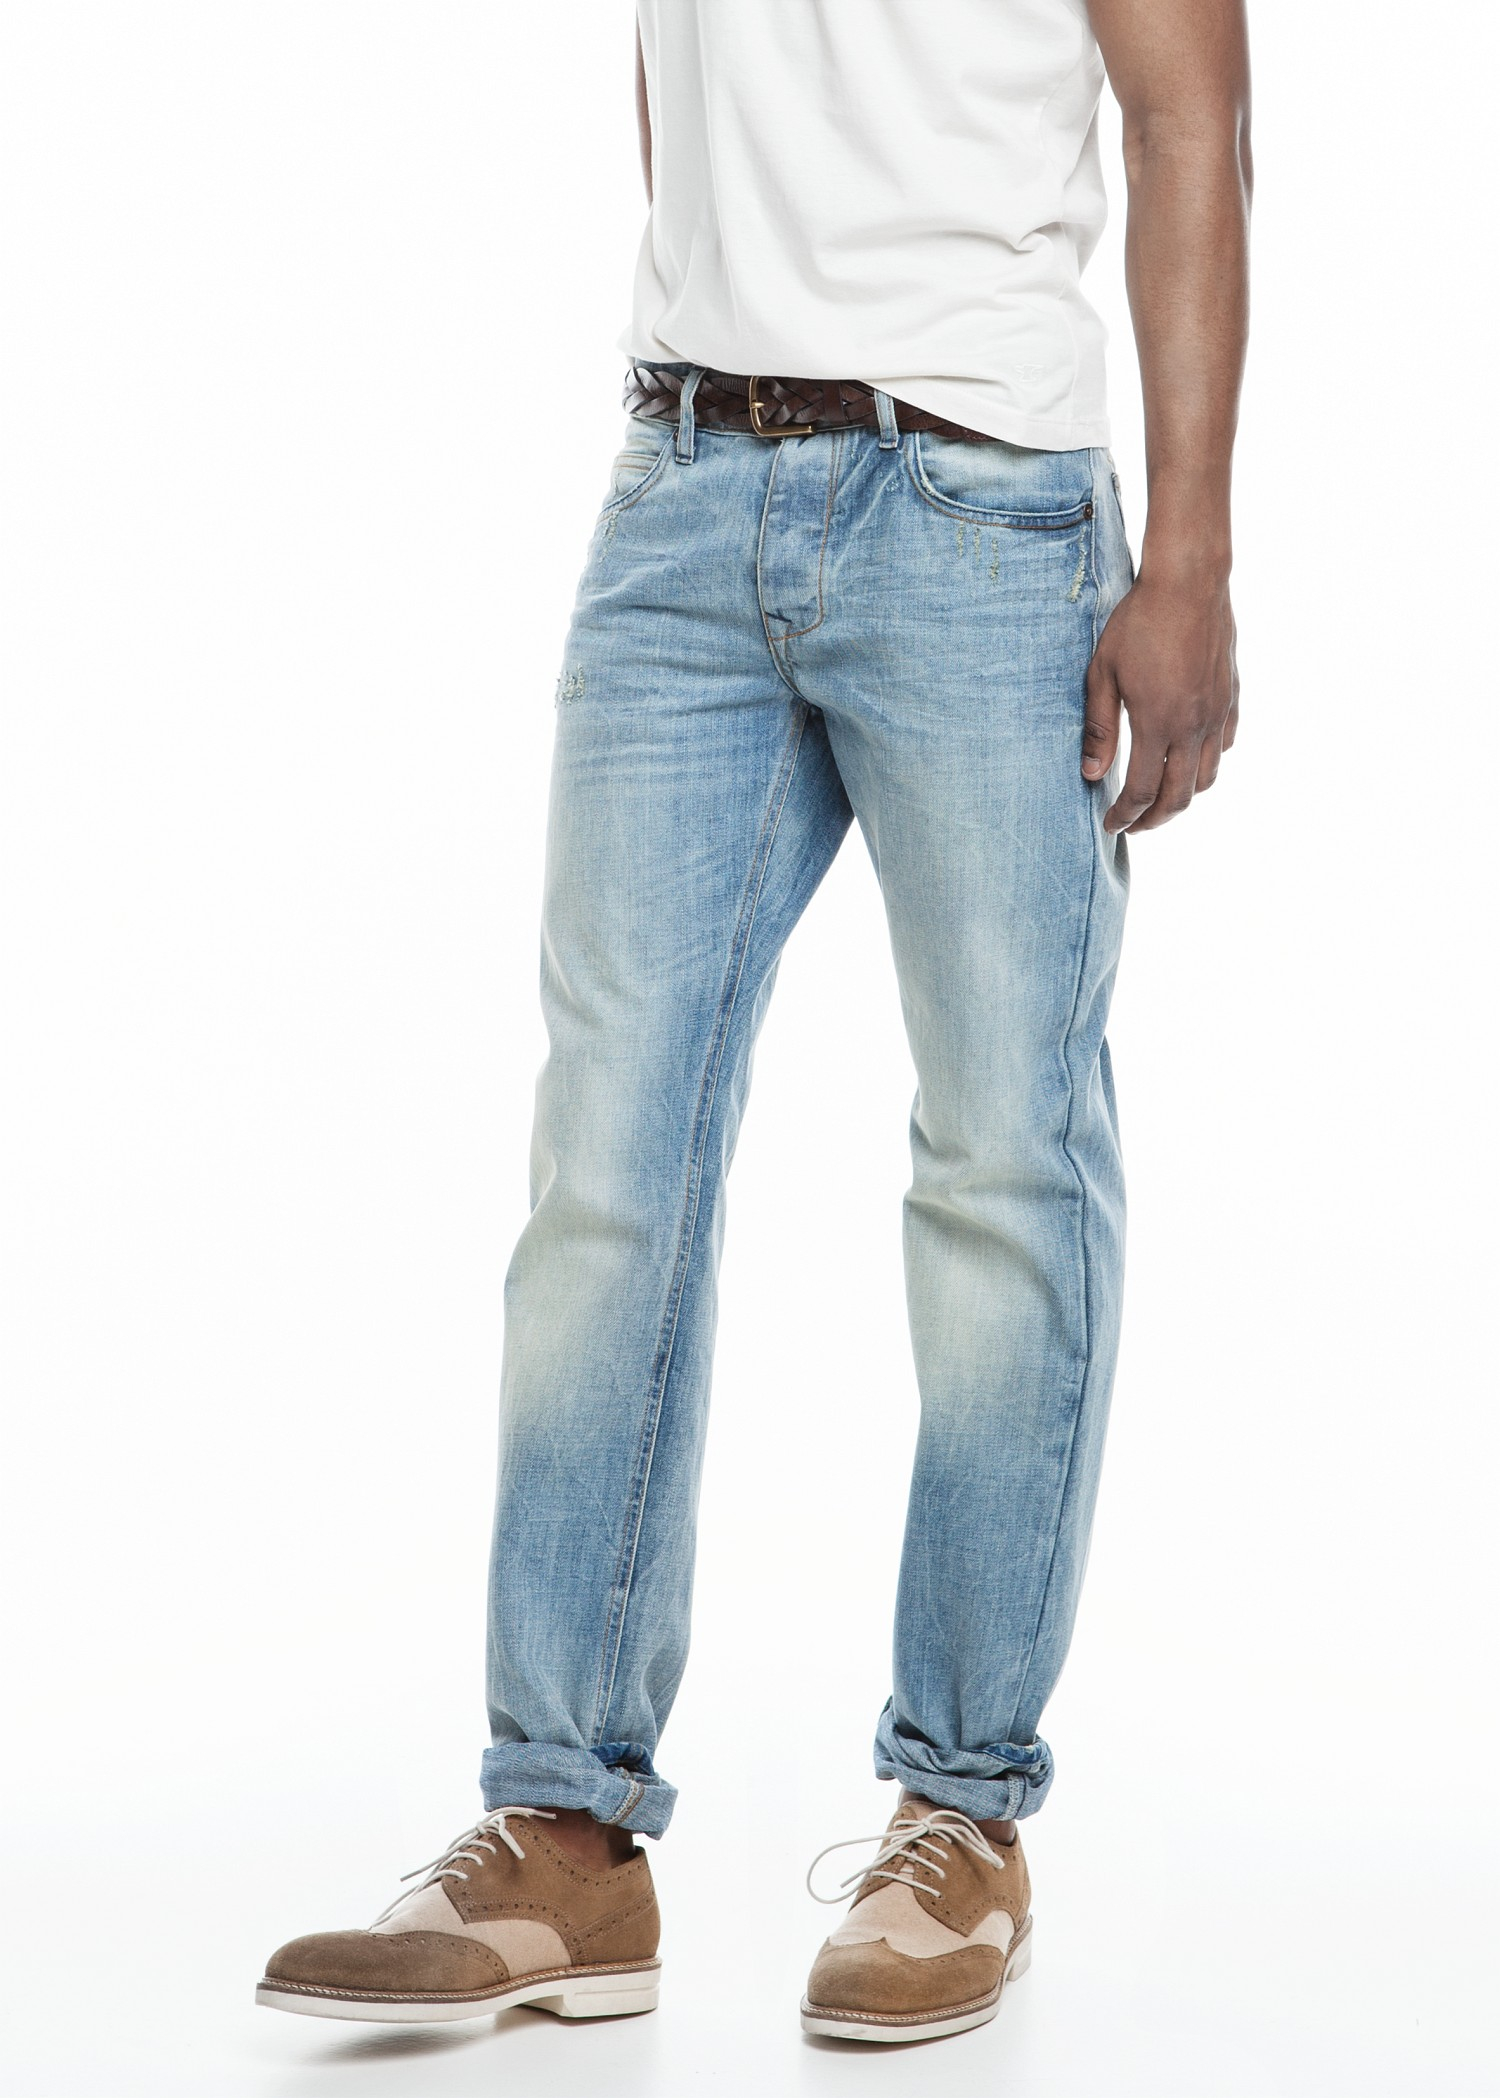 Lyst - Mango Slimfit Medium Wash Steve Jeans in Blue for Men